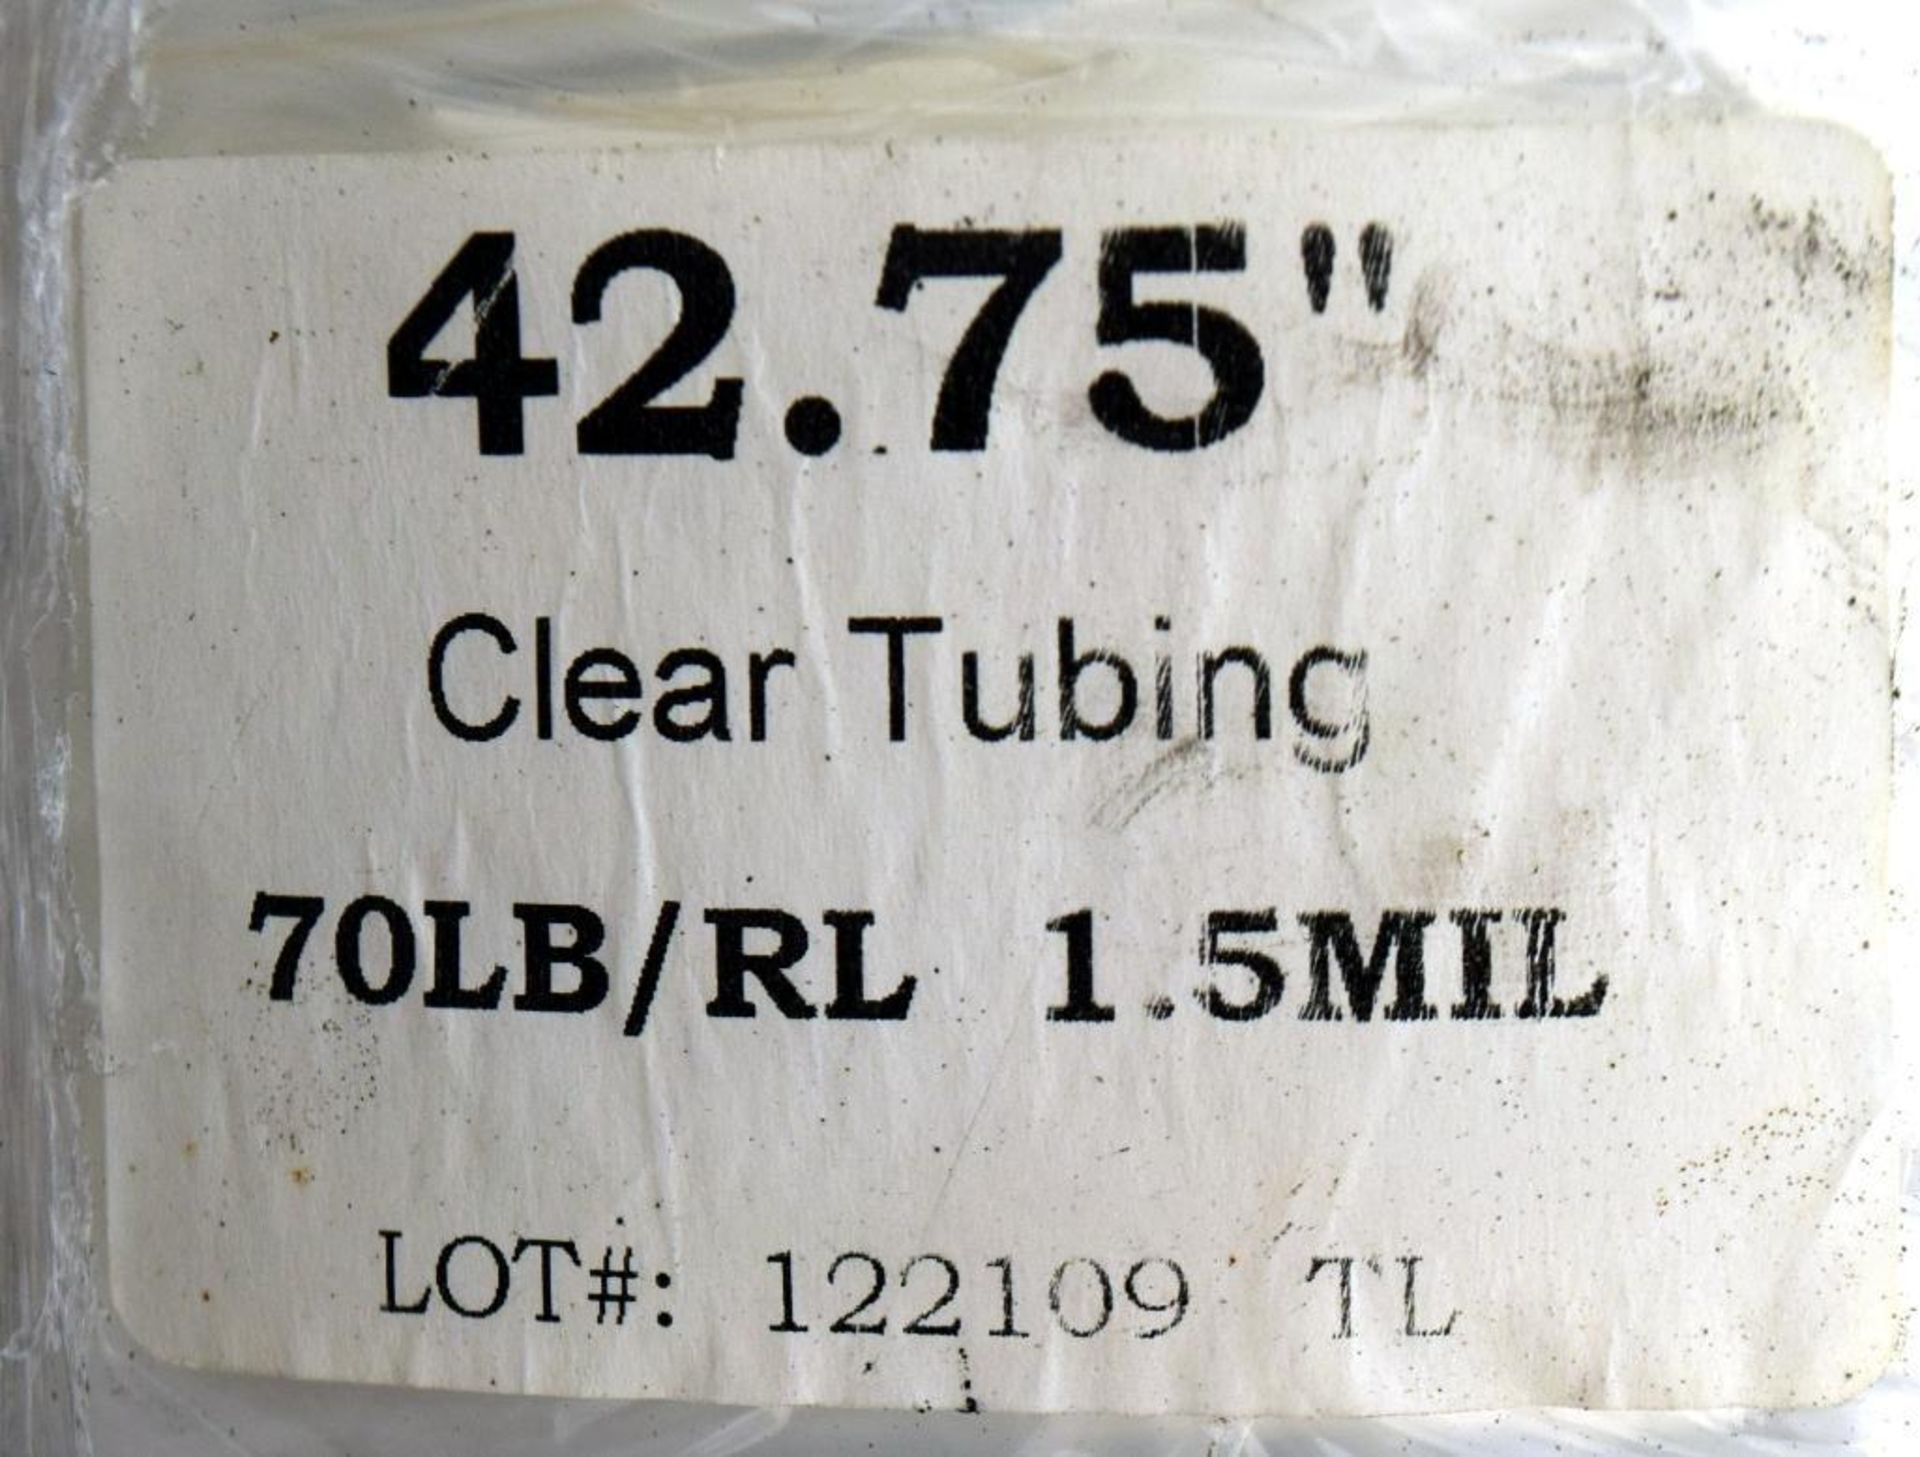 LOT: (10) Rolls of 42.75 in. Clear Plastic, Lot No. 122109TL, 1.5 Mil, 70 lbs. per Roll - Image 3 of 3